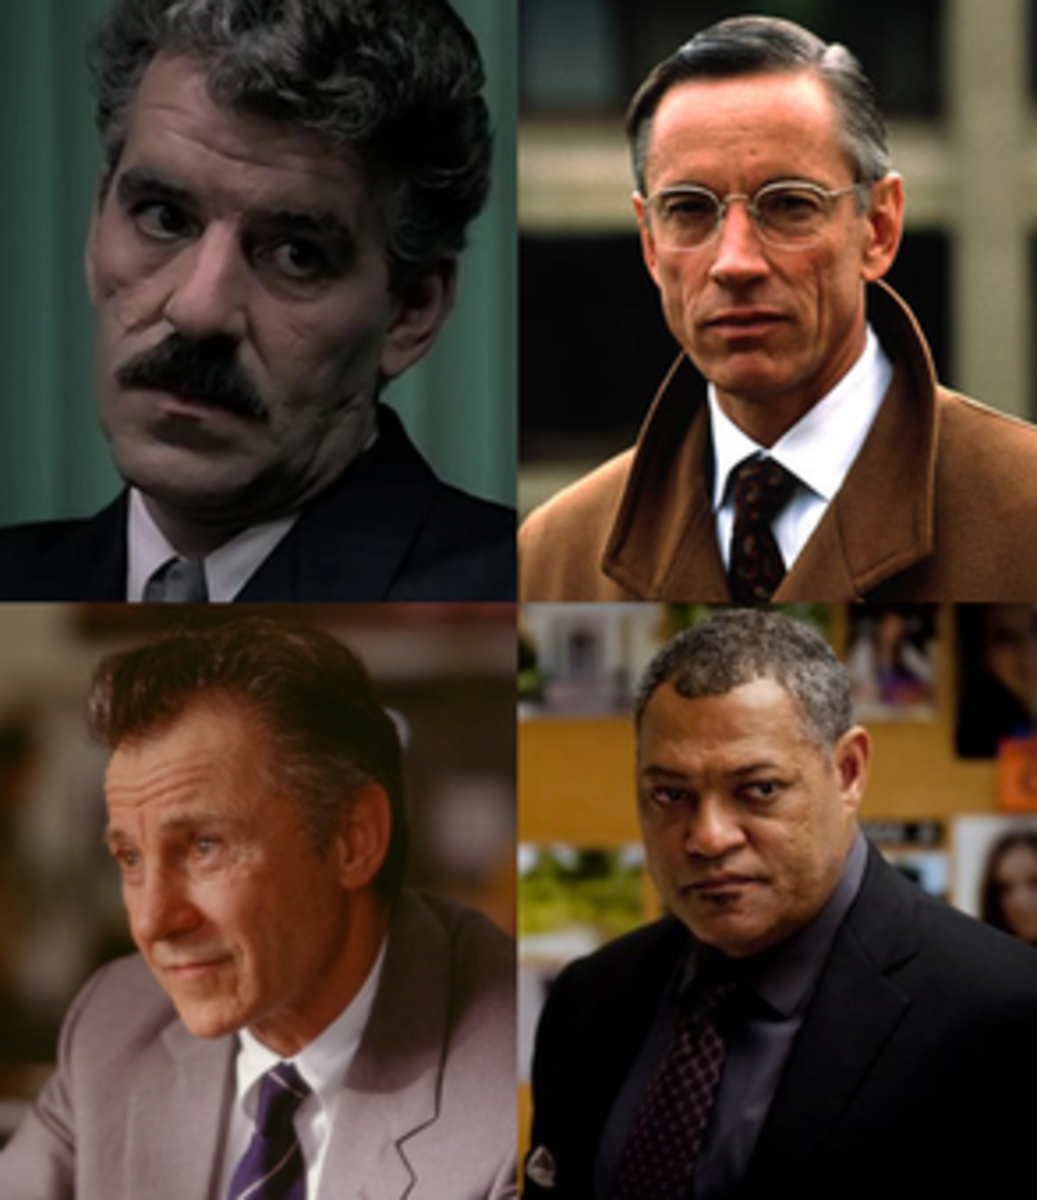 Four on-screen versions of Jack Crawford (clockwise from top left): Dennis Farina, Scott Glenn, Laurence Fishburne, Harvey Keitel.